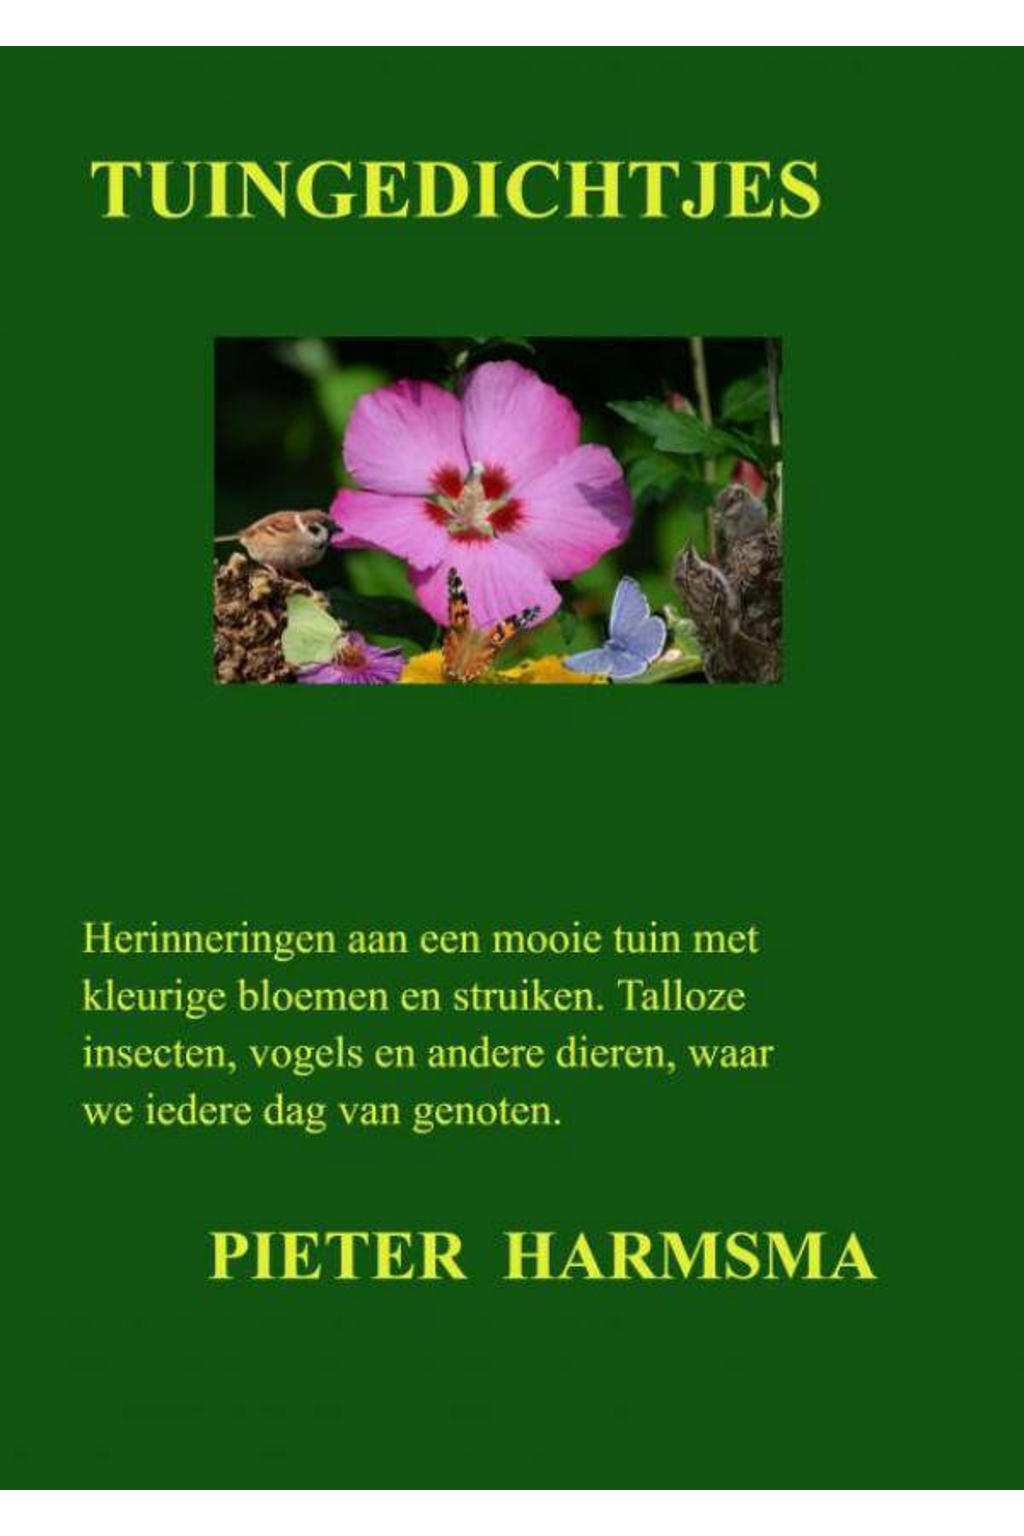 Tuingedichtjes - Pieter Harmsma